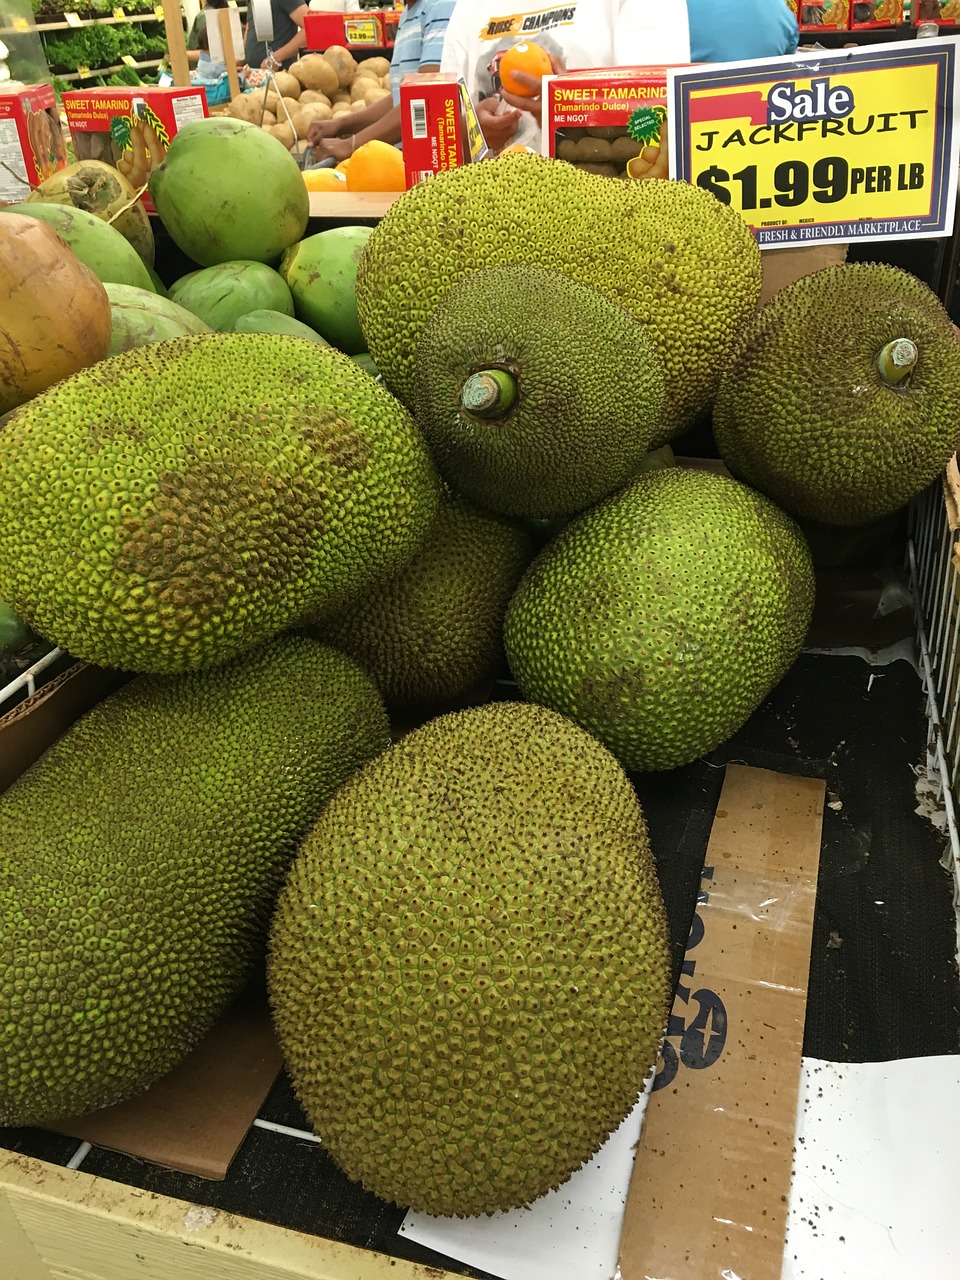 jackfruit vegetable market free photo